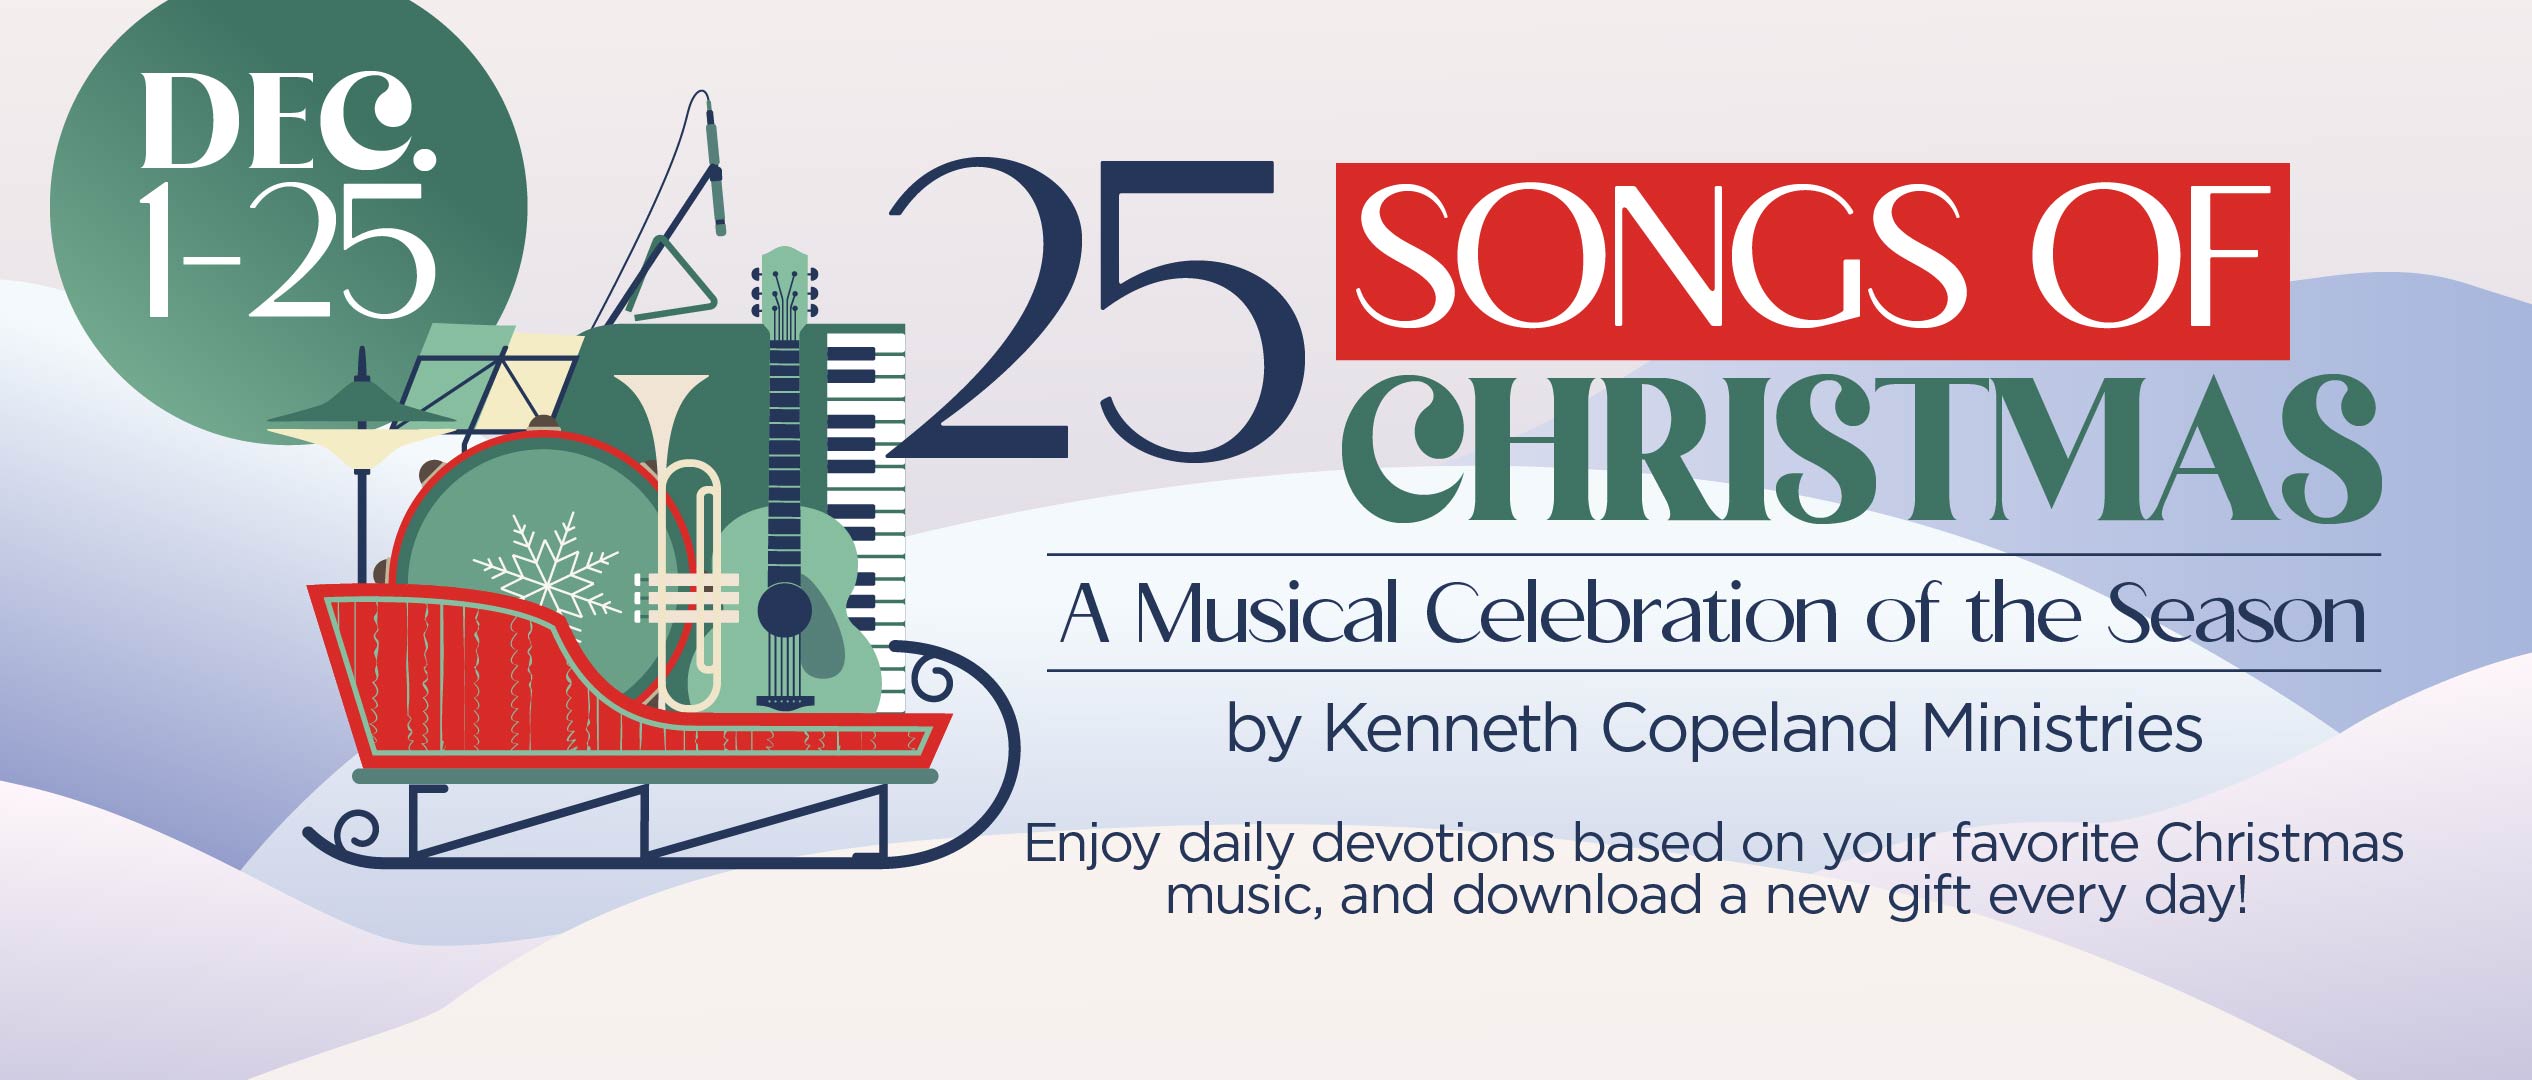 A Musical Celebration of Christmas